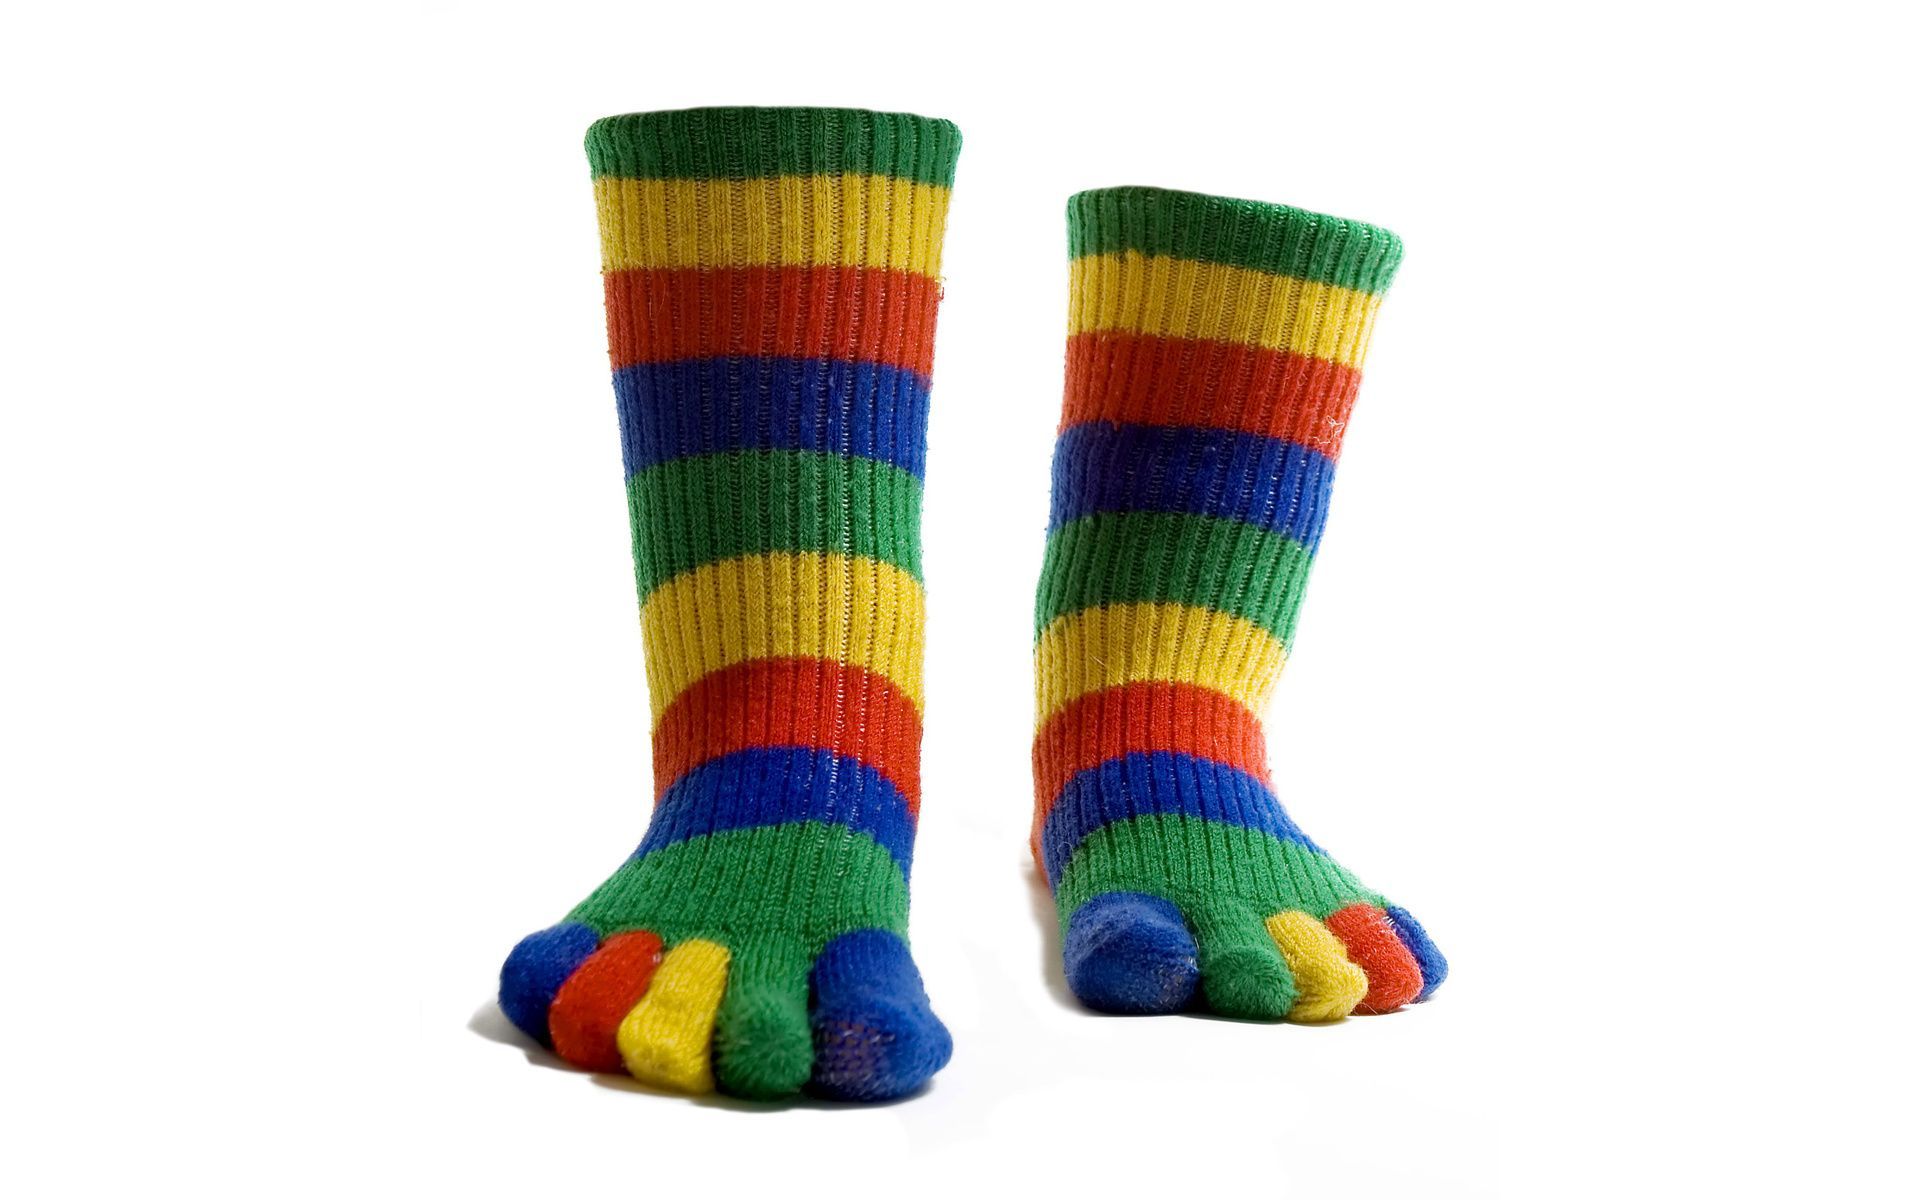 Colorful Socks Hd Wallpaper Colorful Socks Hd Wallpaper - Hd Wallpapers For Socks , HD Wallpaper & Backgrounds